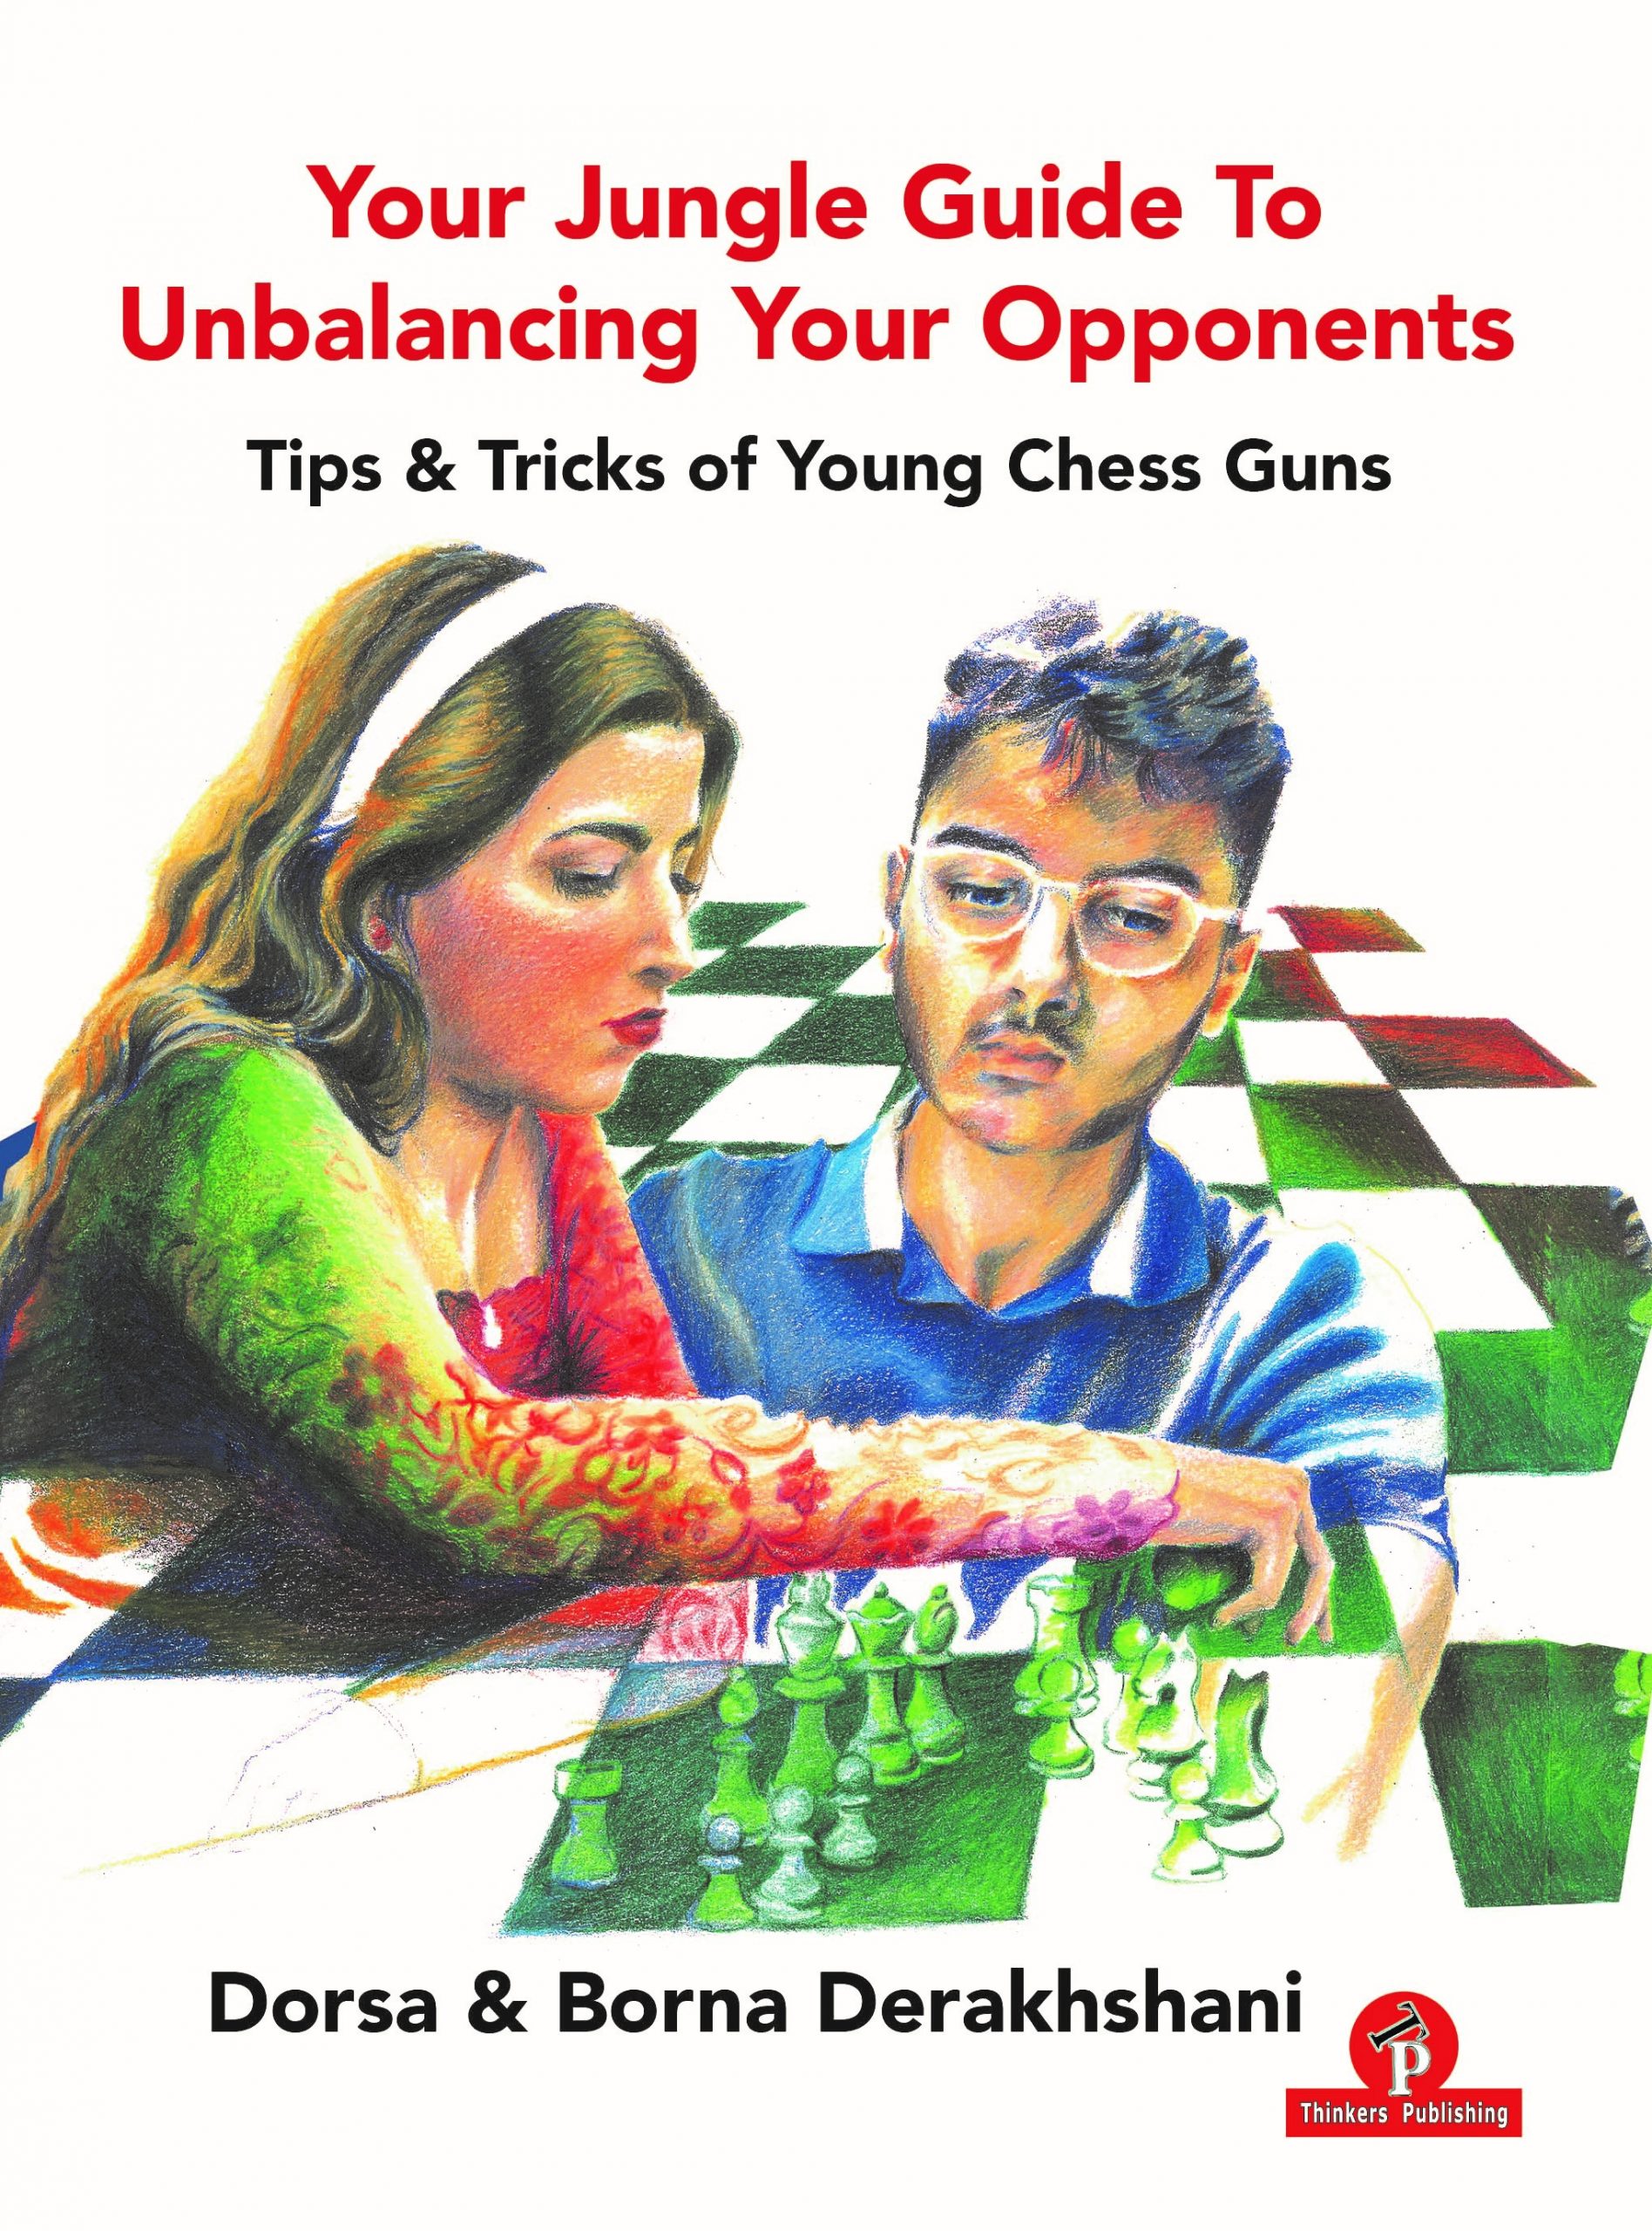 Your Jungle Guide to Unbalancing Your Opponents - Dorsa & Borna Derakhshani